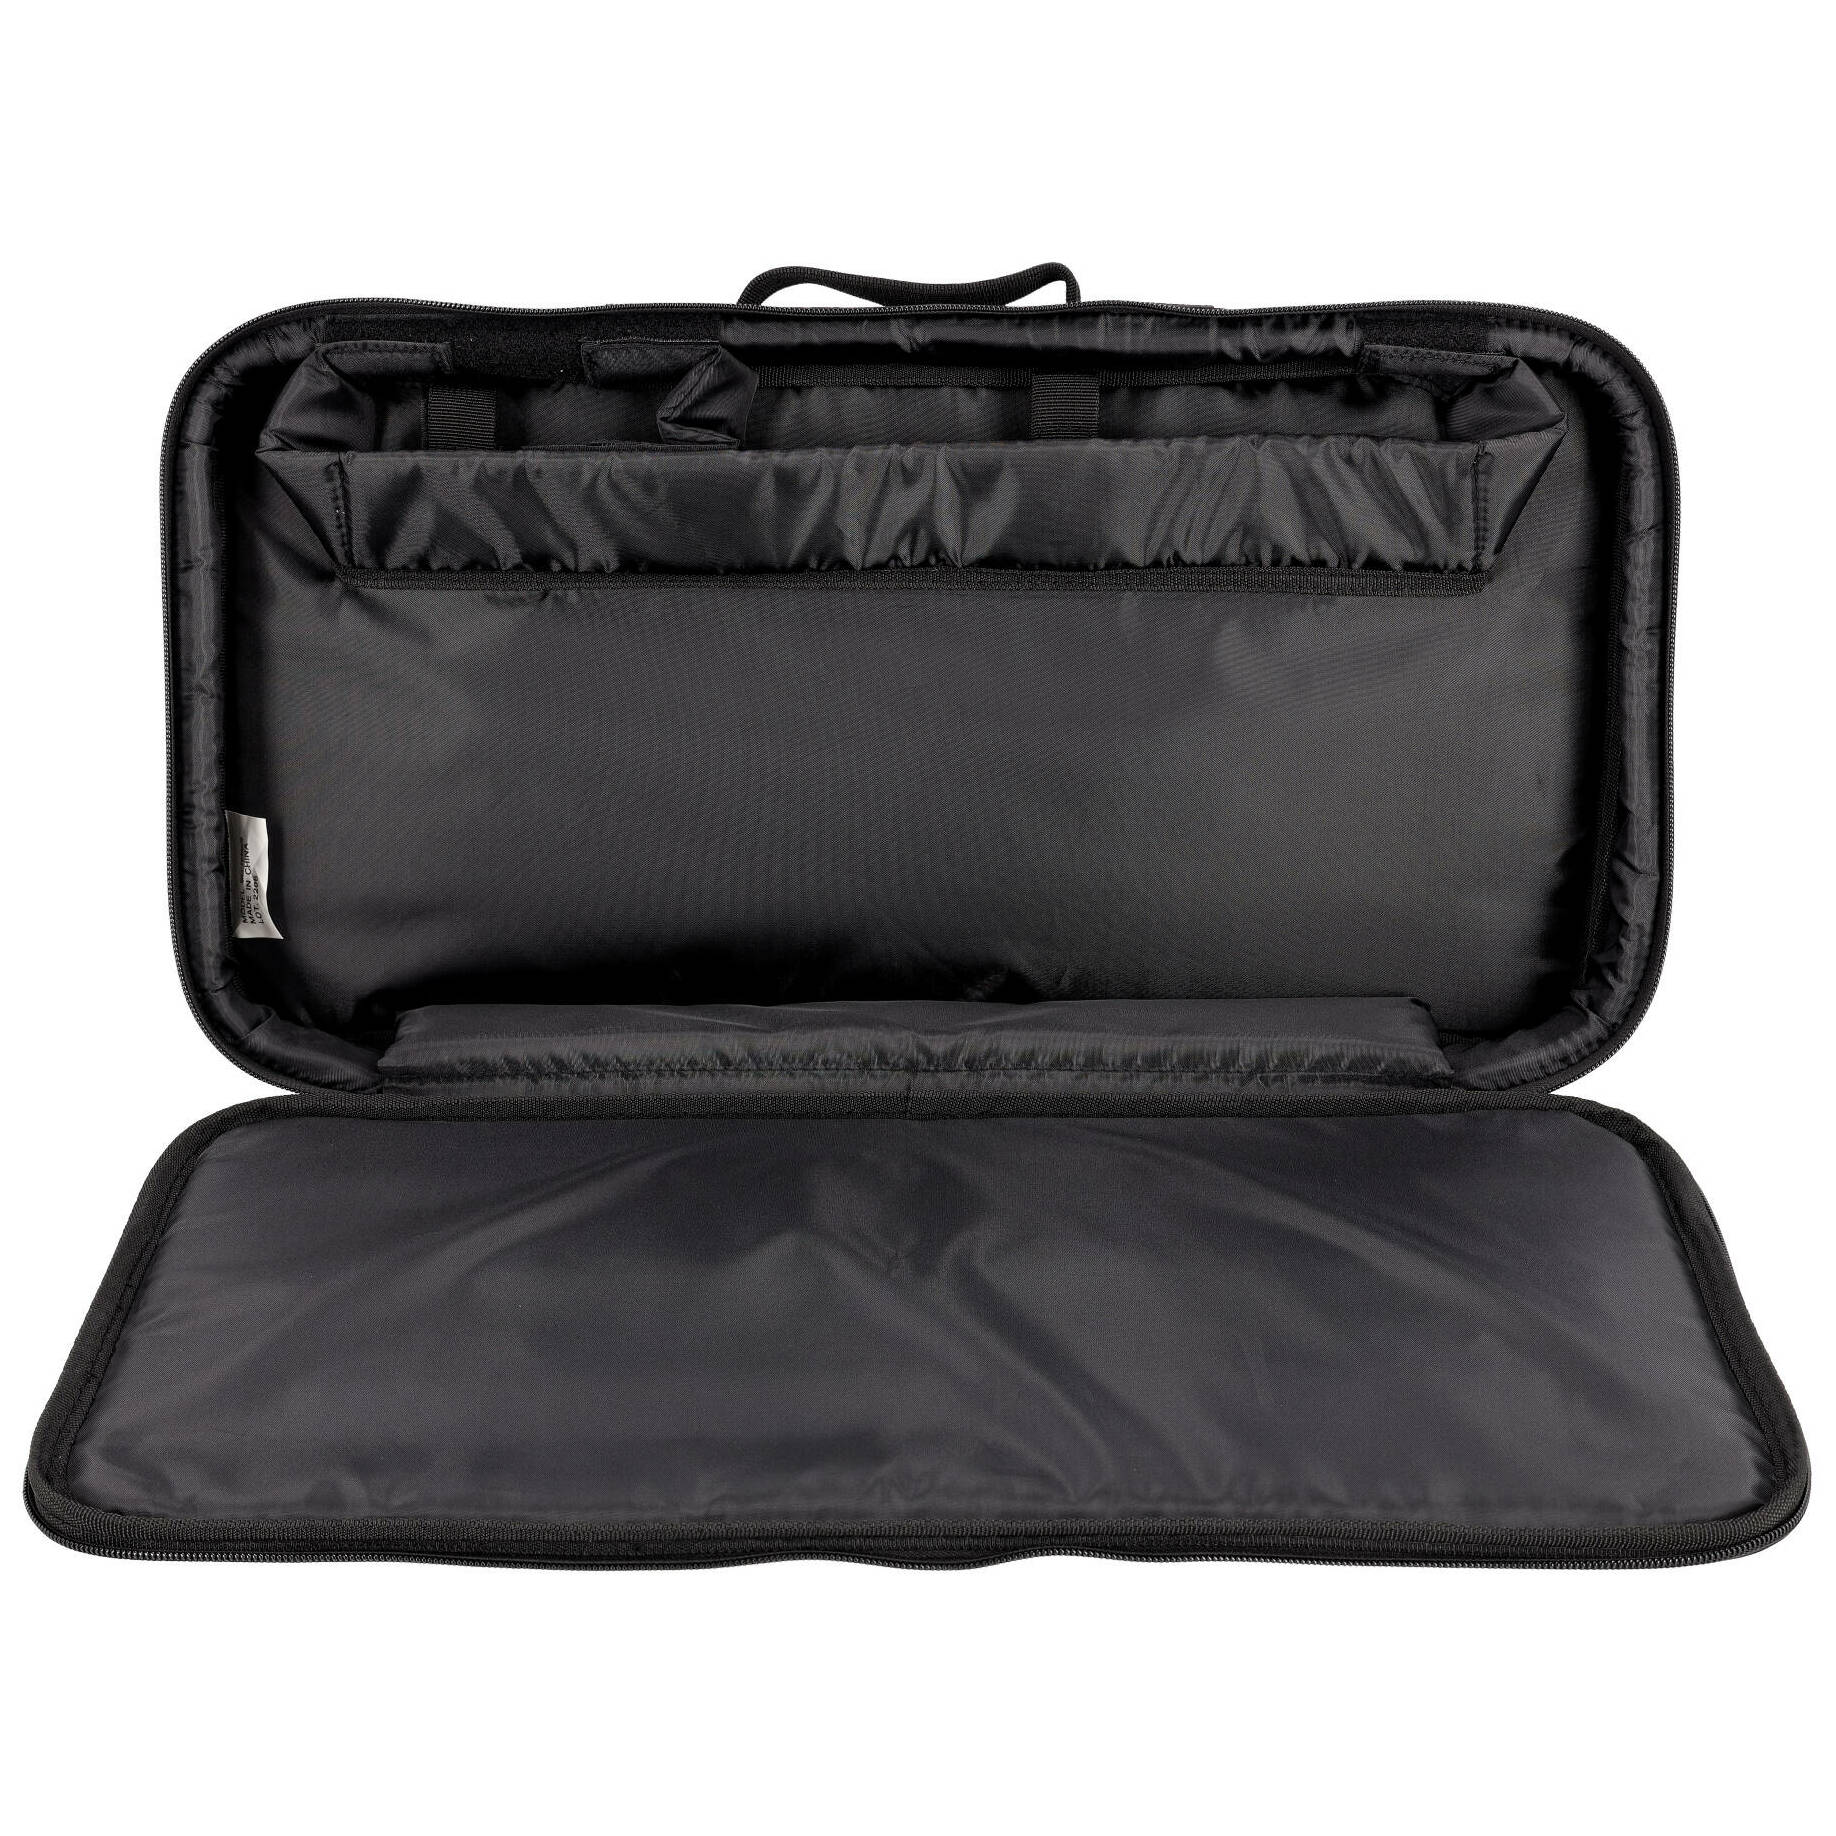 Yamaha reface Soft Case Bag 2